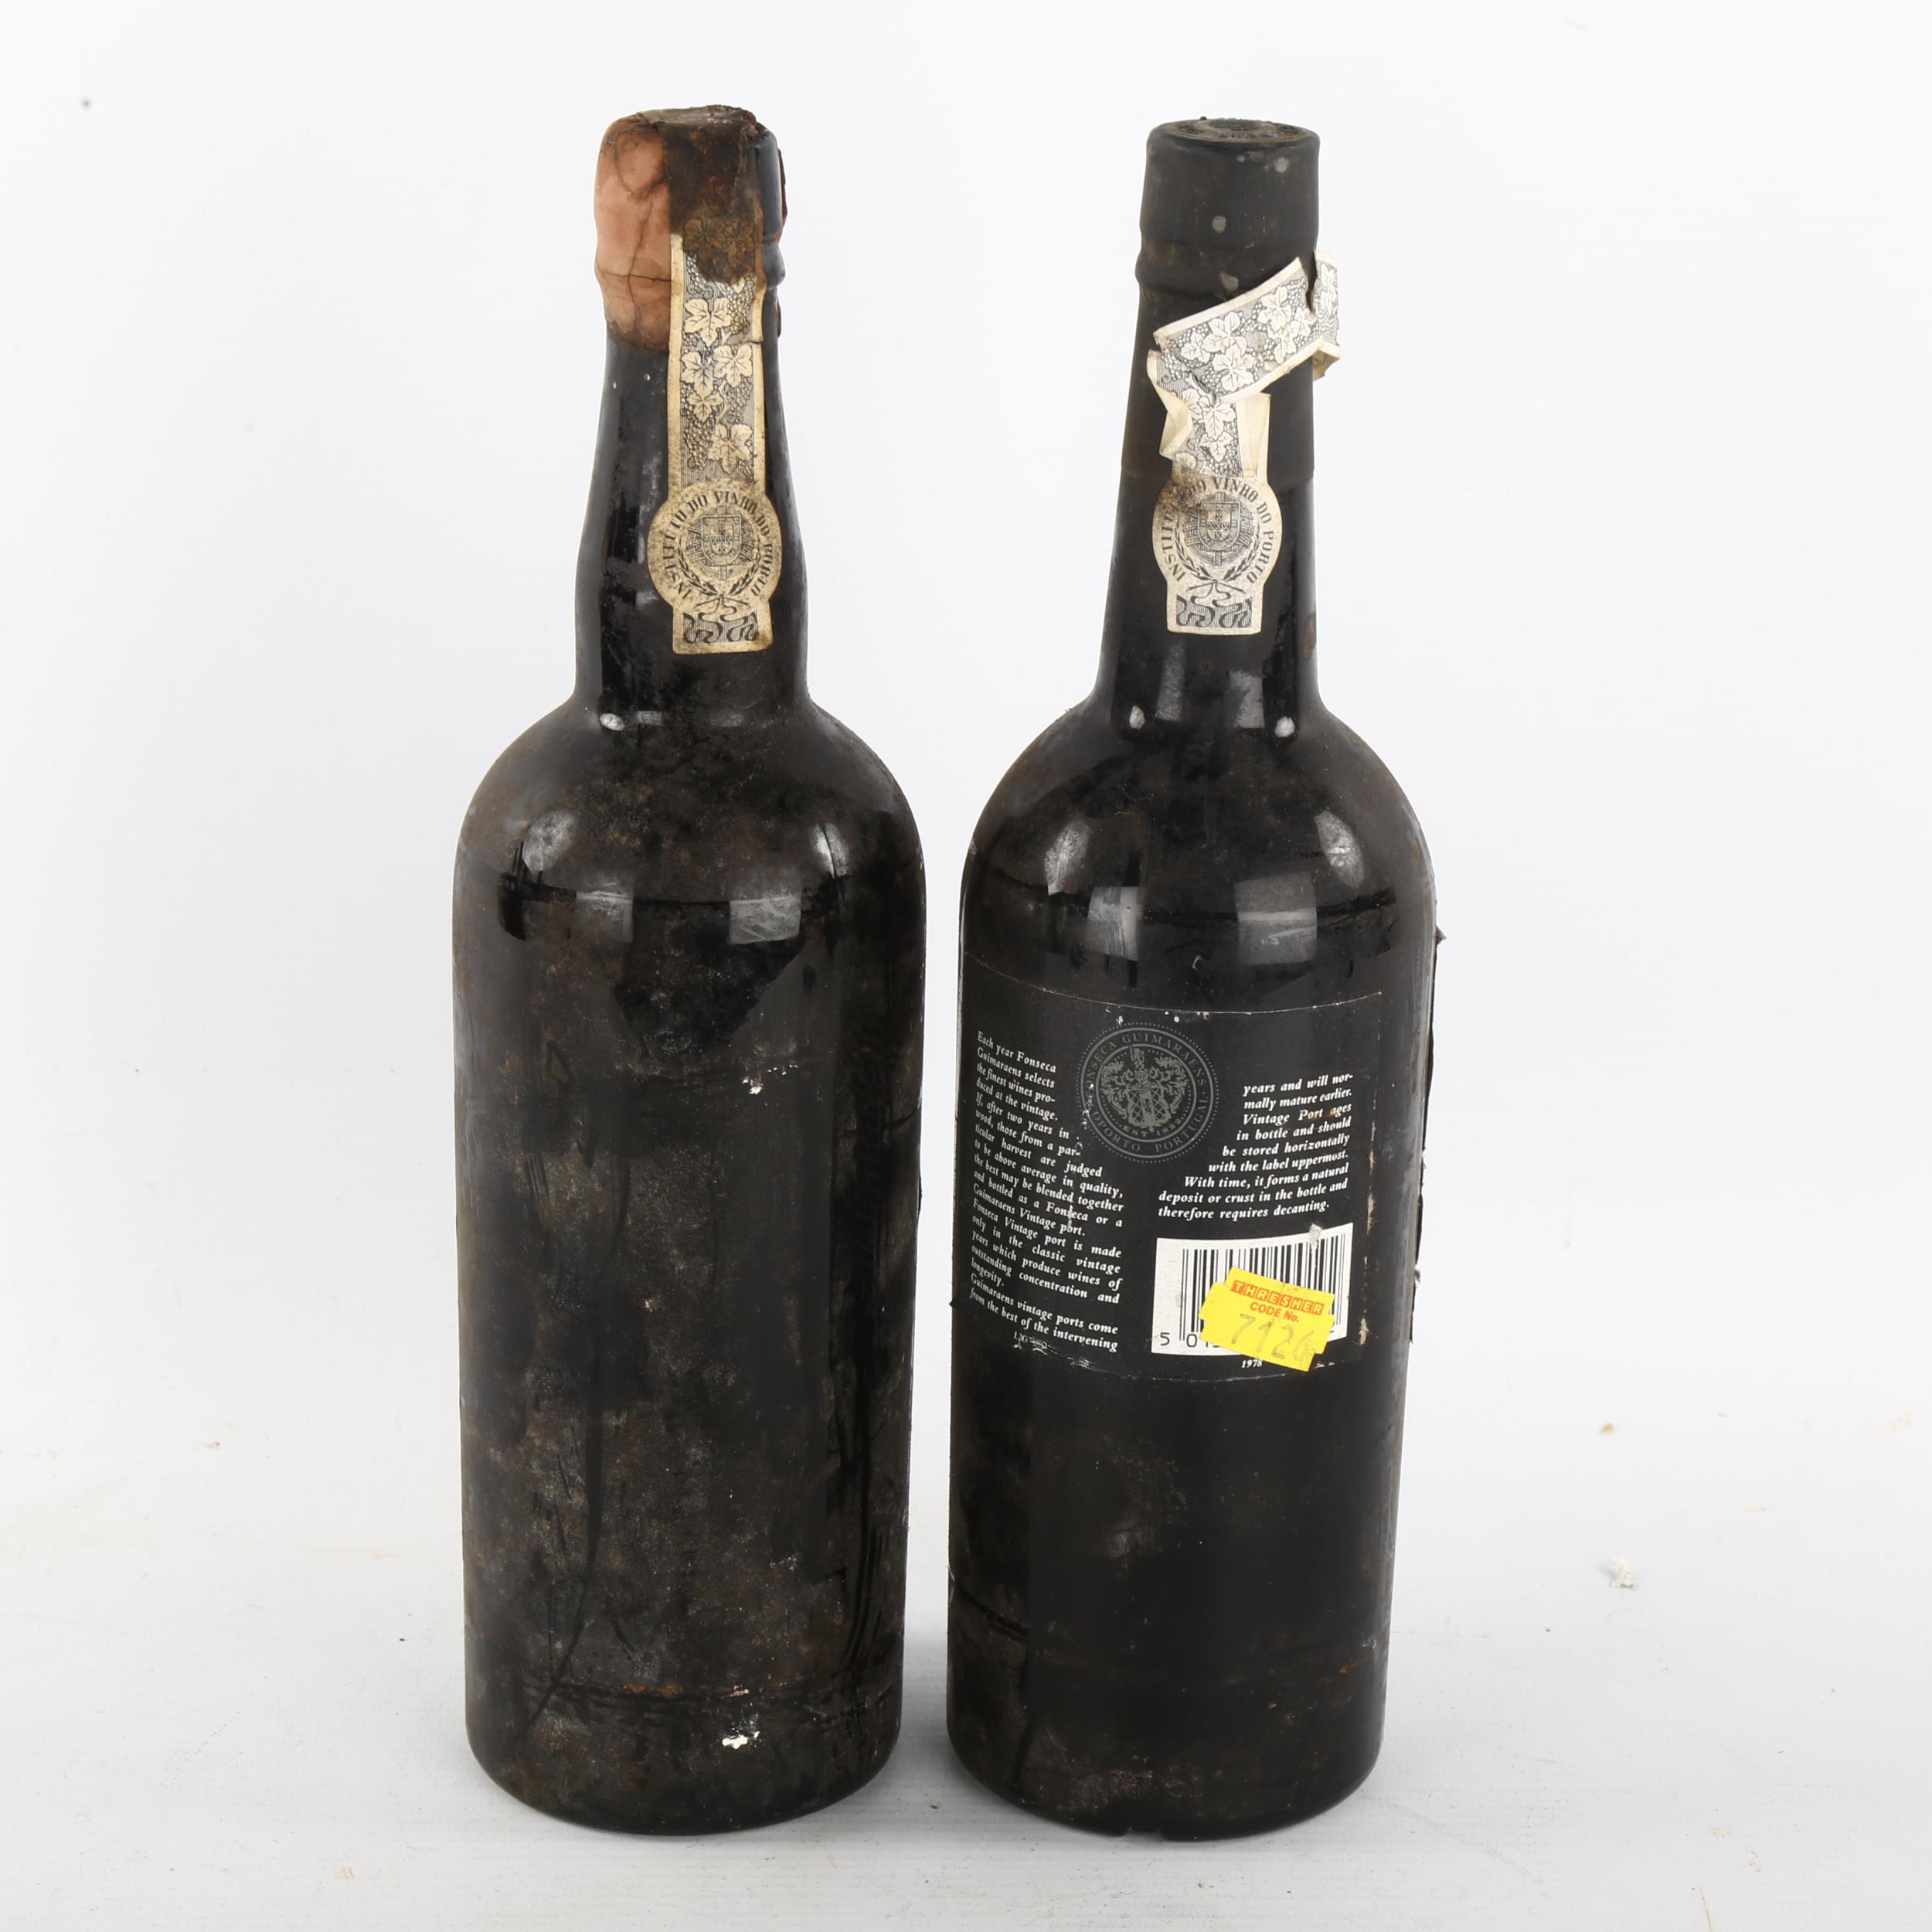 2 bottles of vintage port, Fonseca 1960, Fonseca Guimaraens 1978 levels to low neck 1960 - capsule - Image 2 of 3